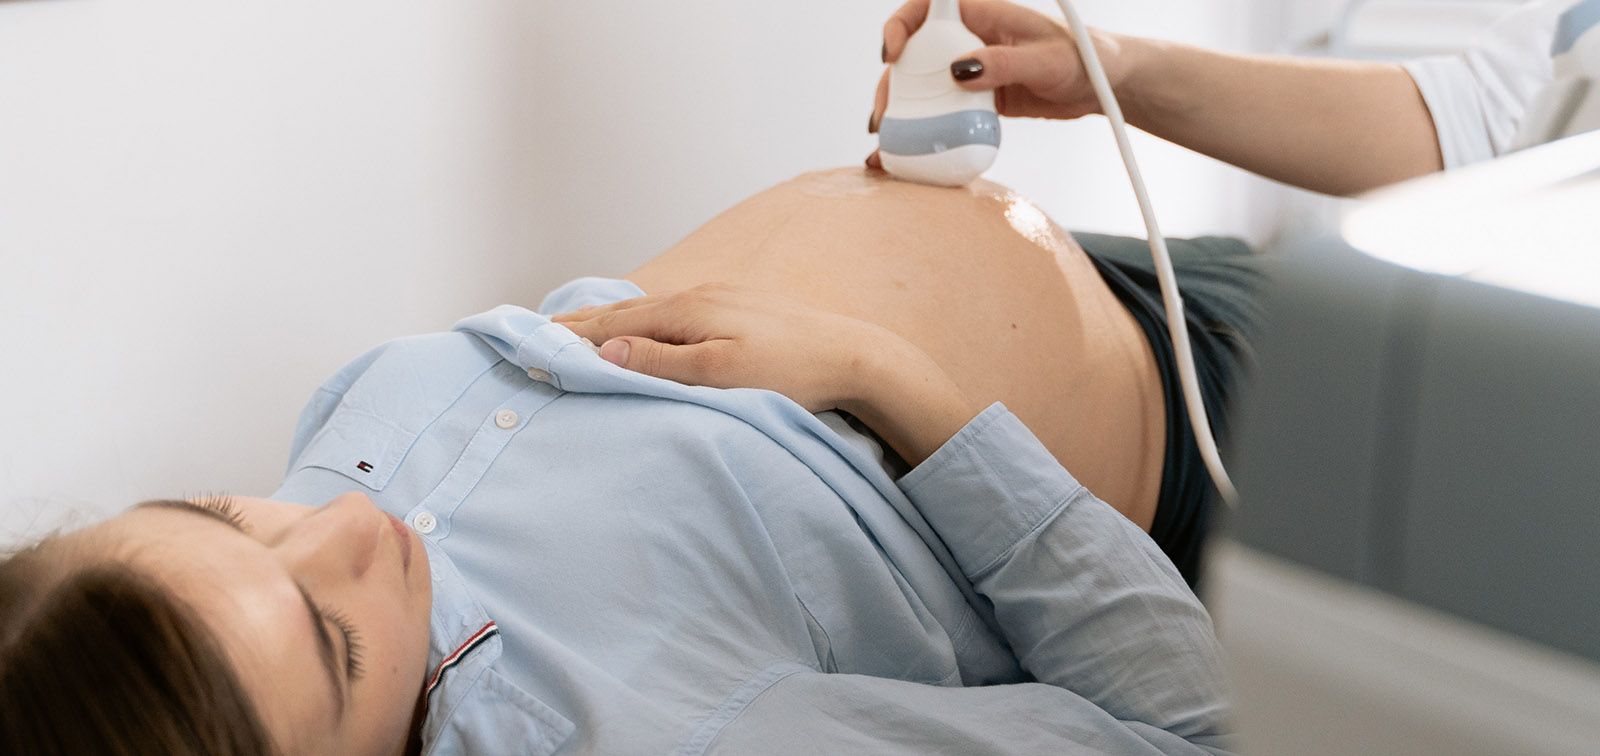 Pregnant woman in a health care unit